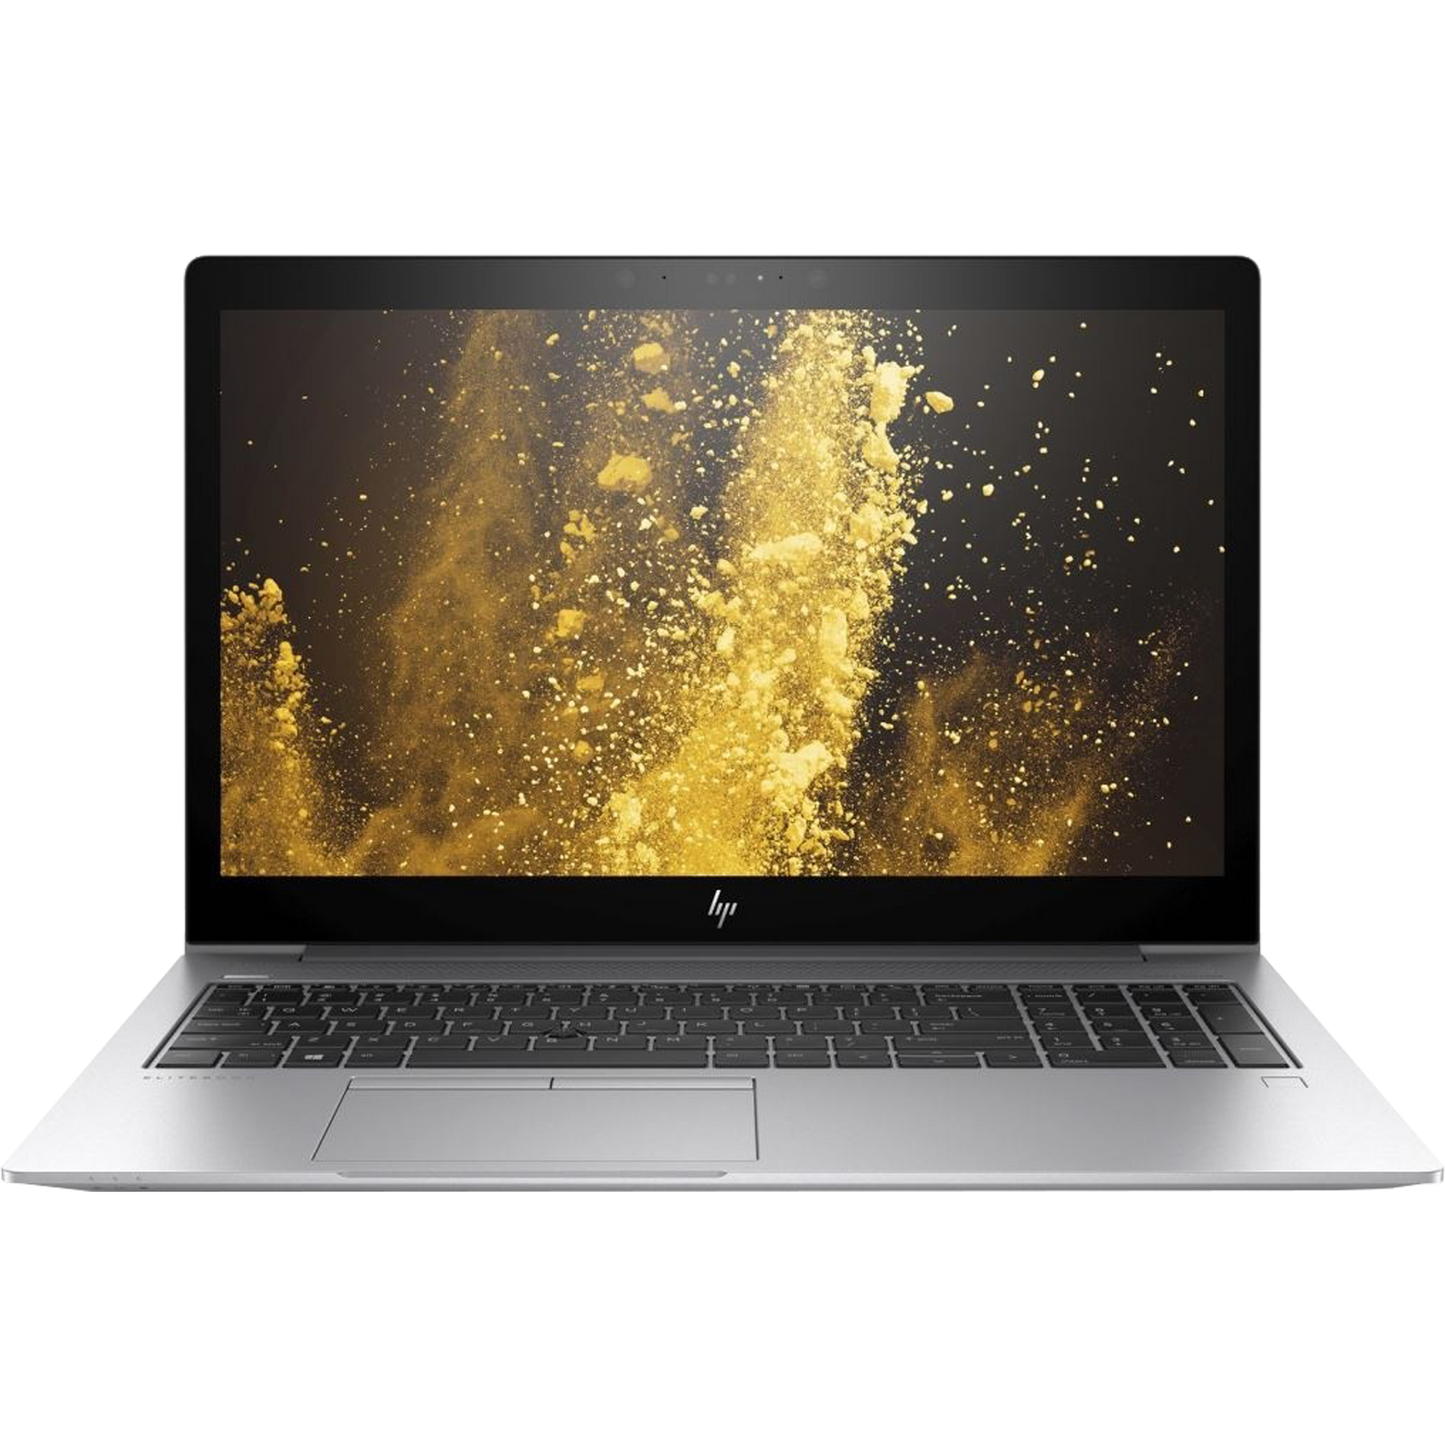 HP EliteBook 850 G5 Intel i5, 8th Gen Ultrabook Laptop with 16GB Ram Laptops - Refurbished